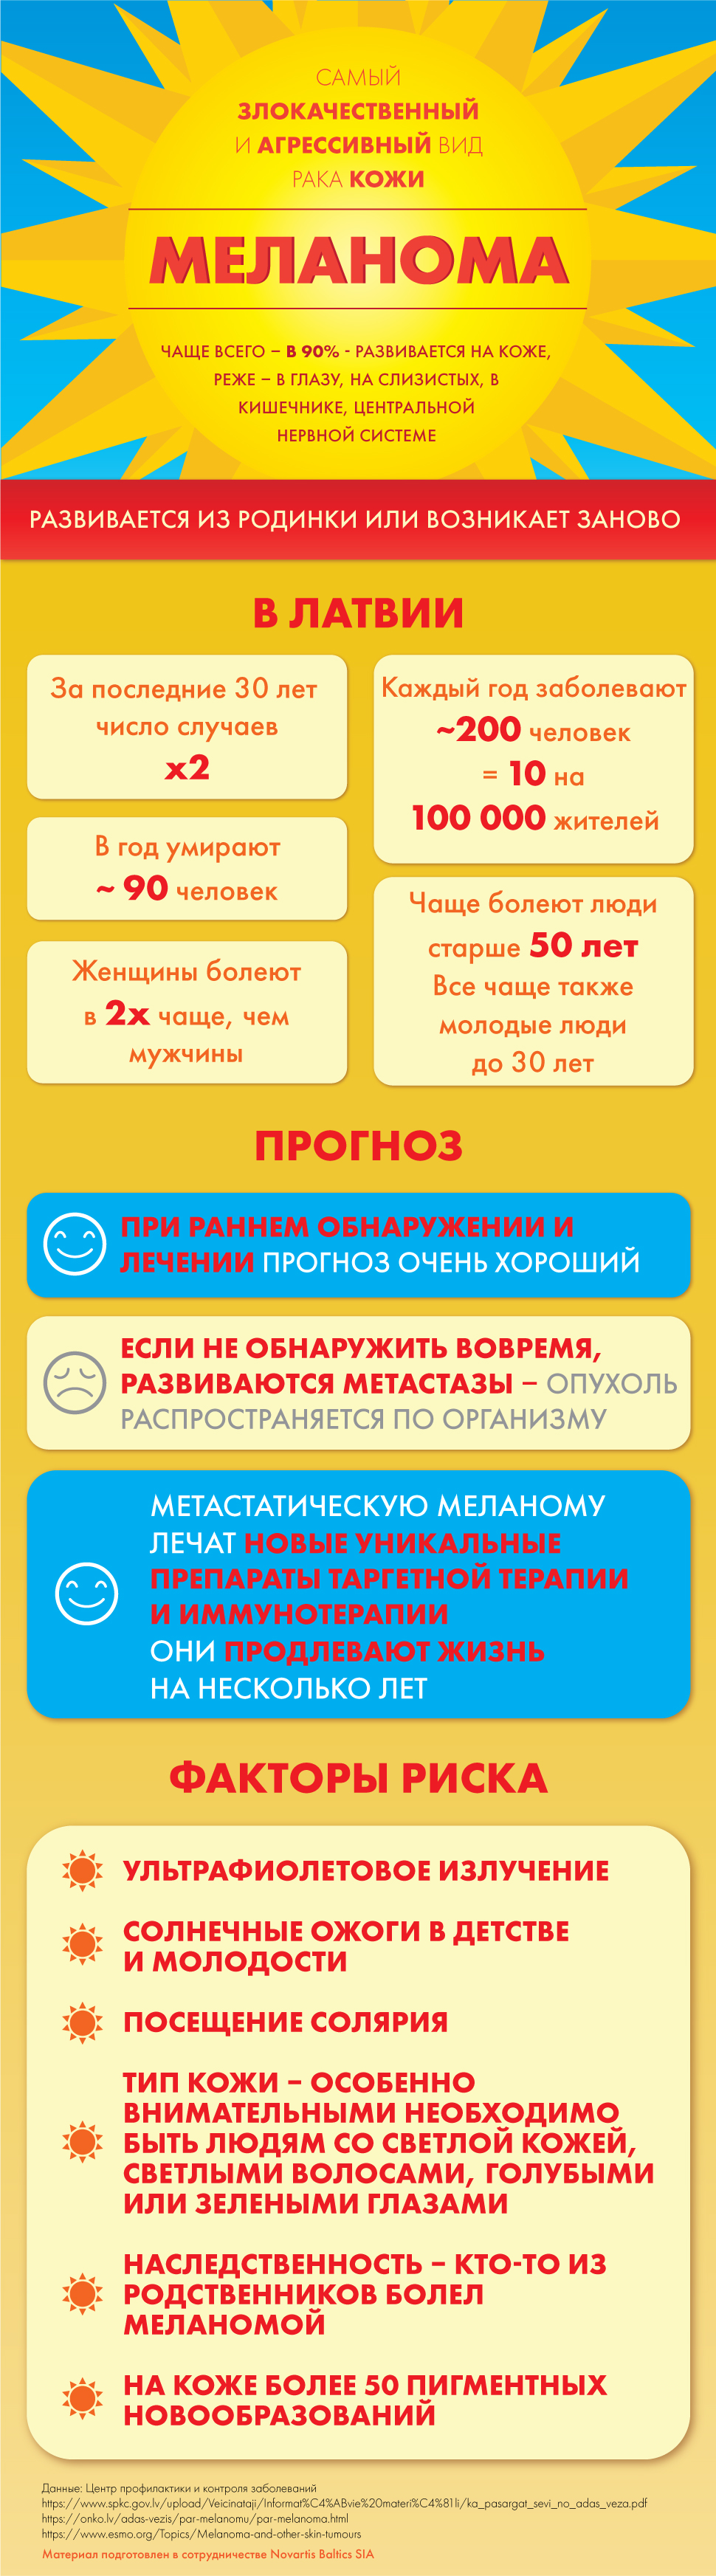 Melanoma infografika RU 120819